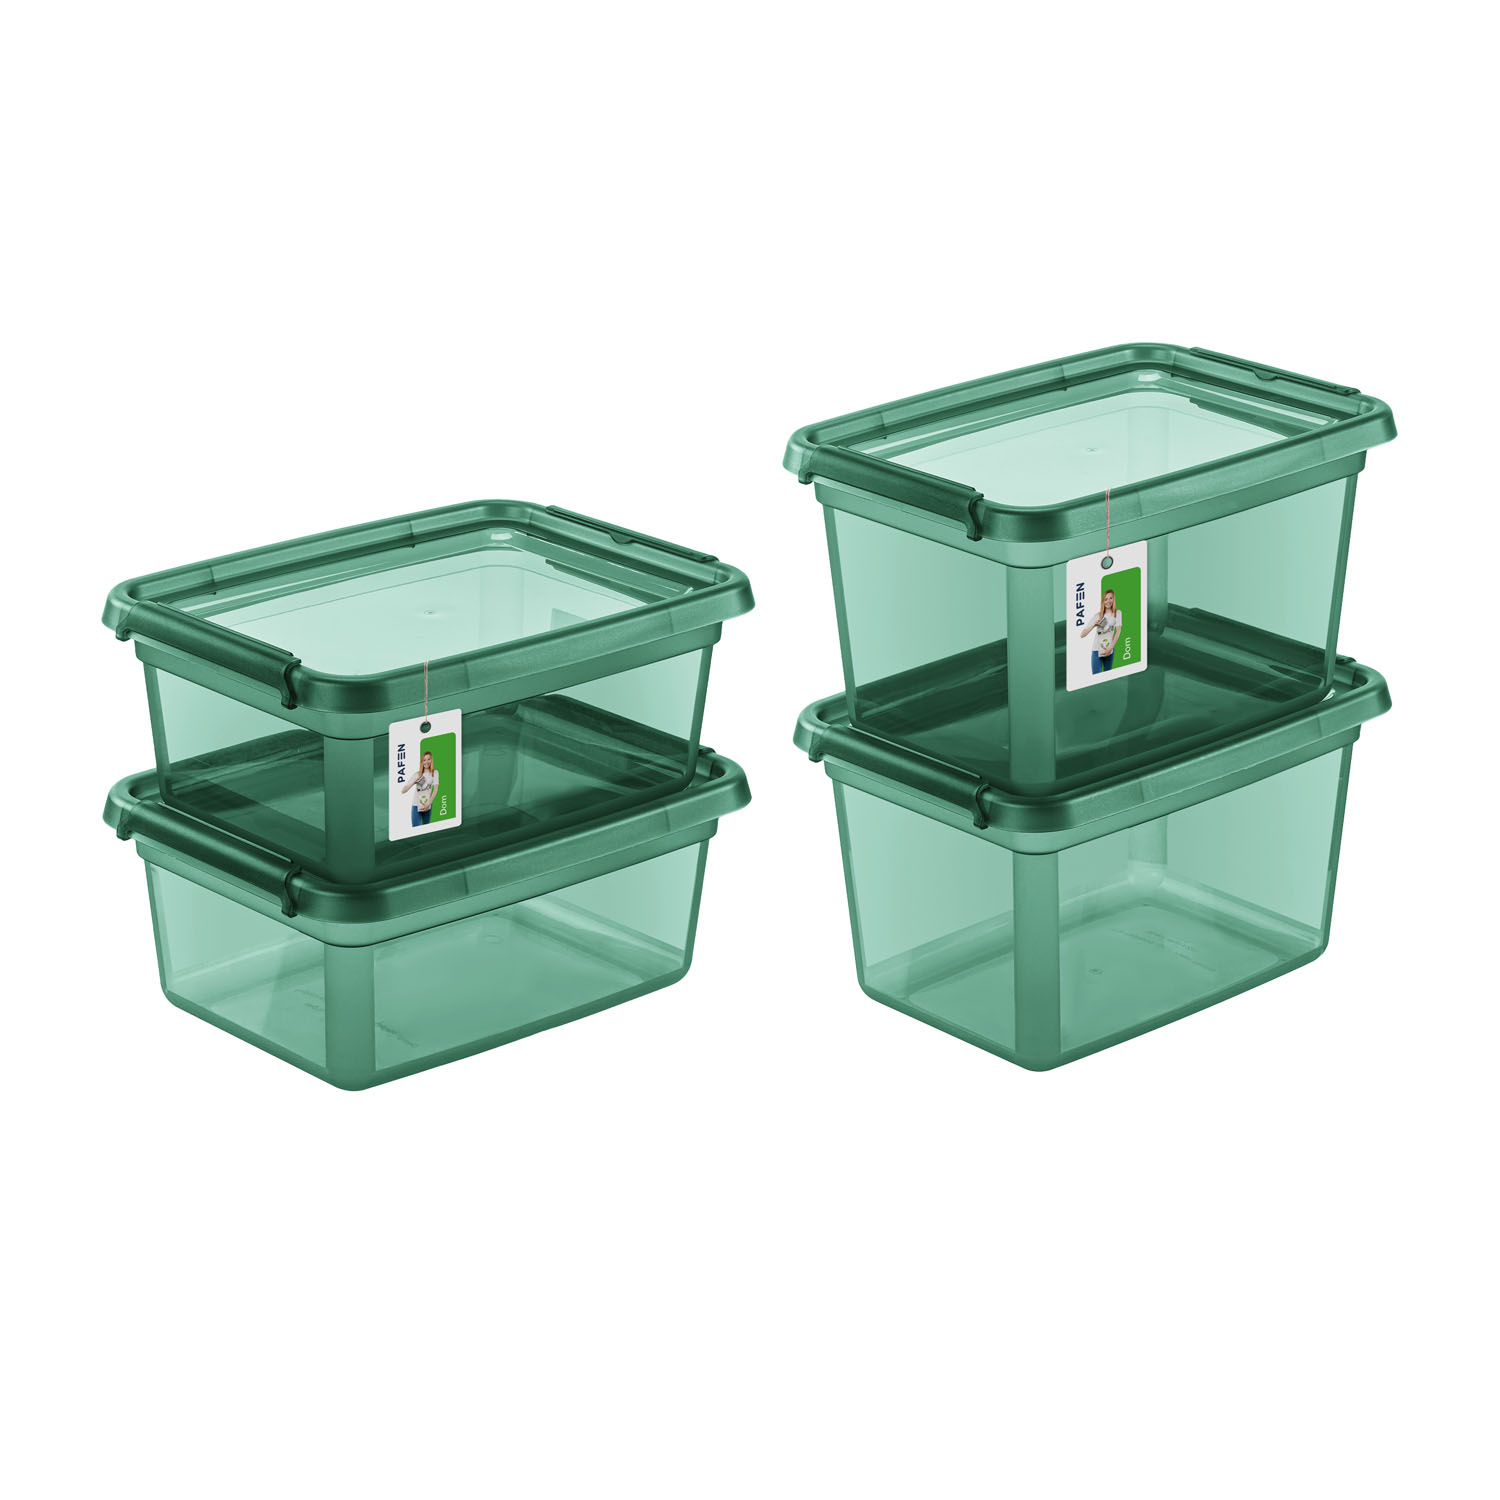 BaseStore Color SET1 Transparent green storage container set